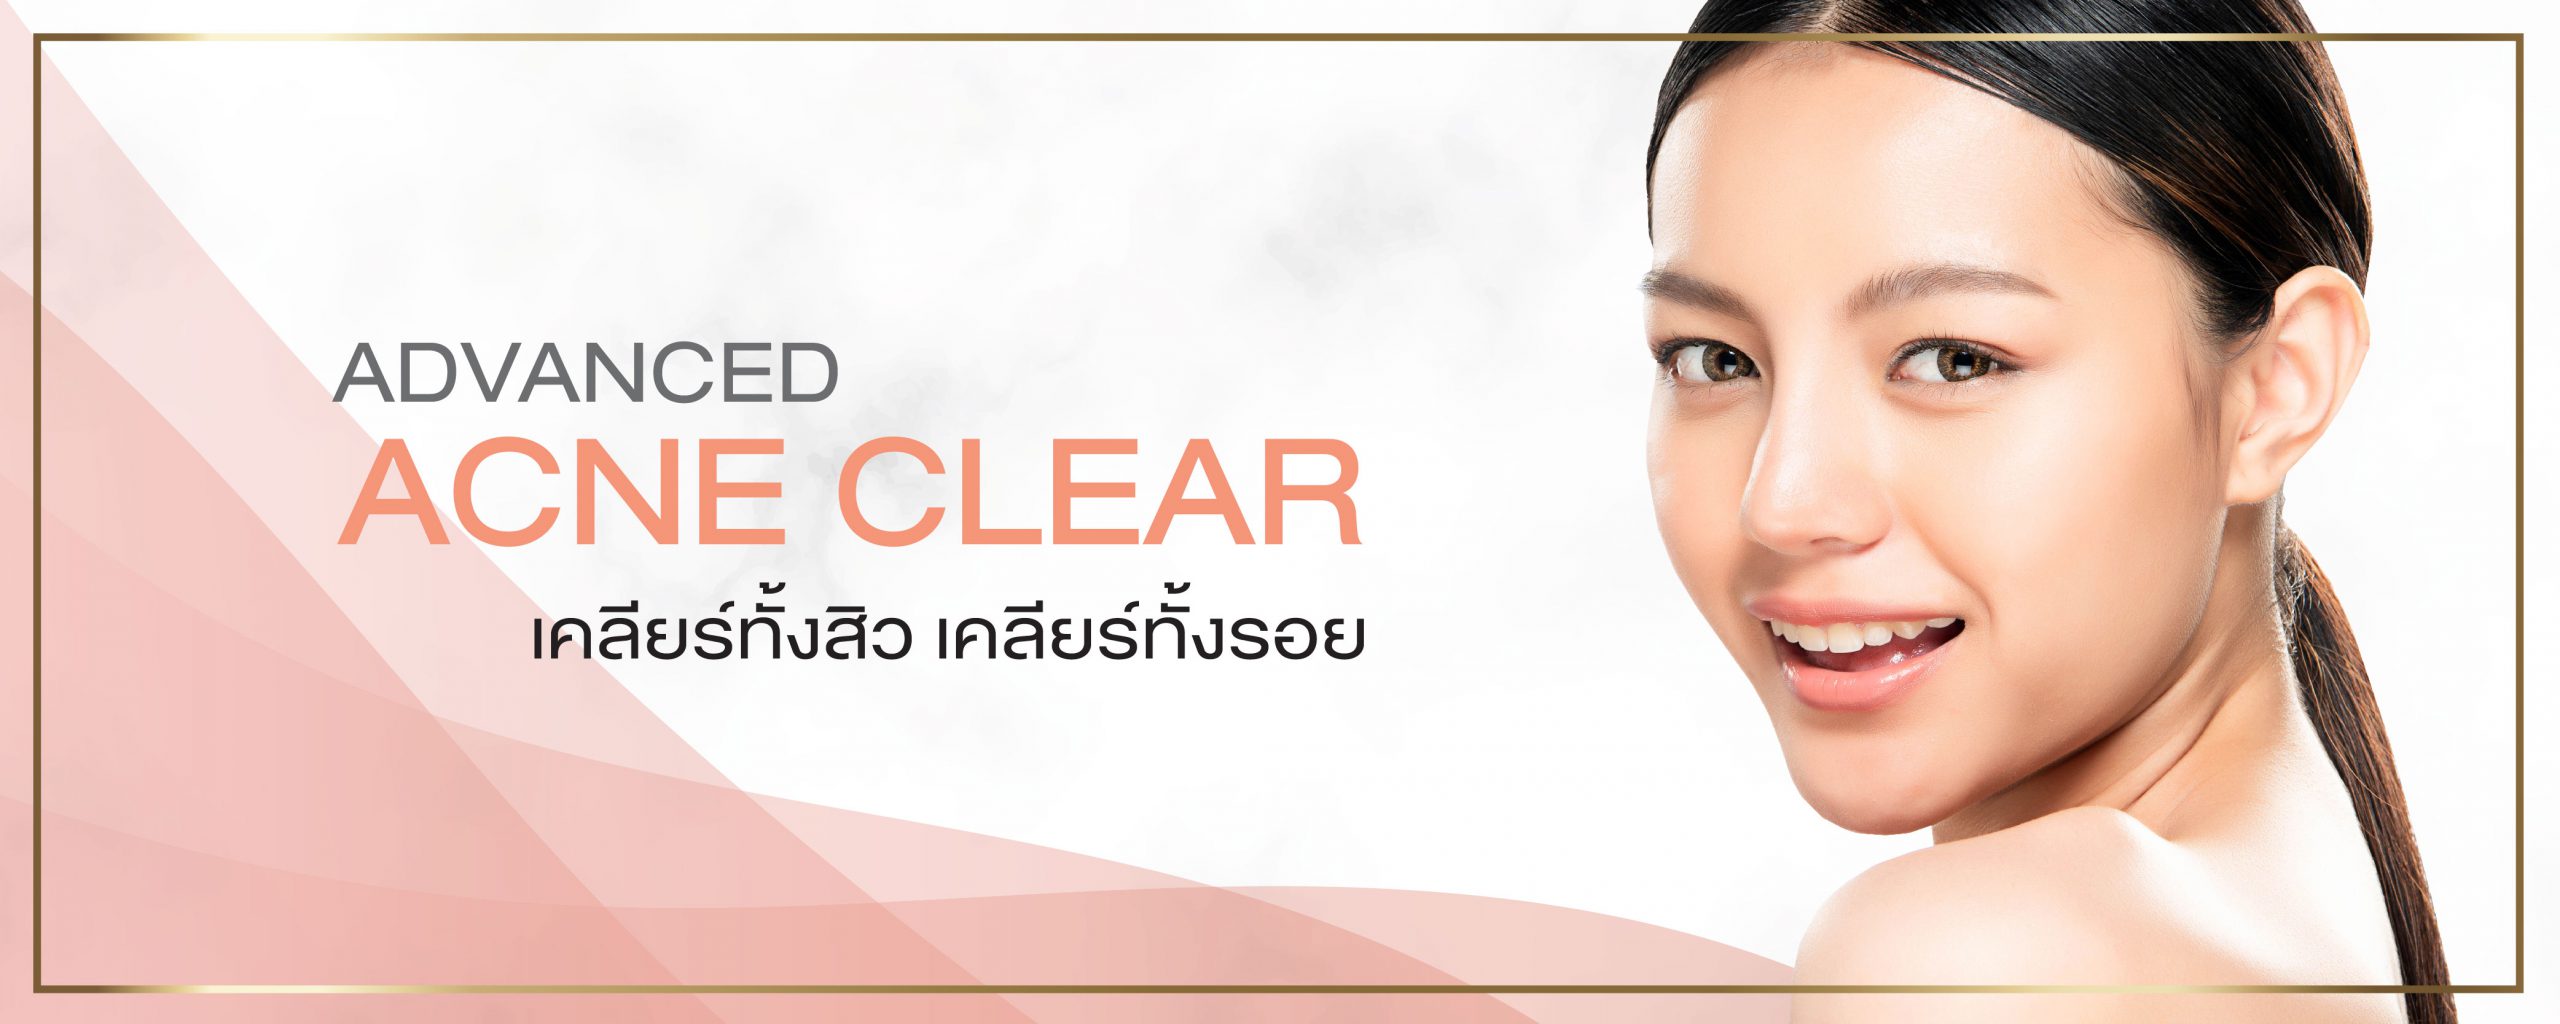 web_advance acne clear_1000x400-01